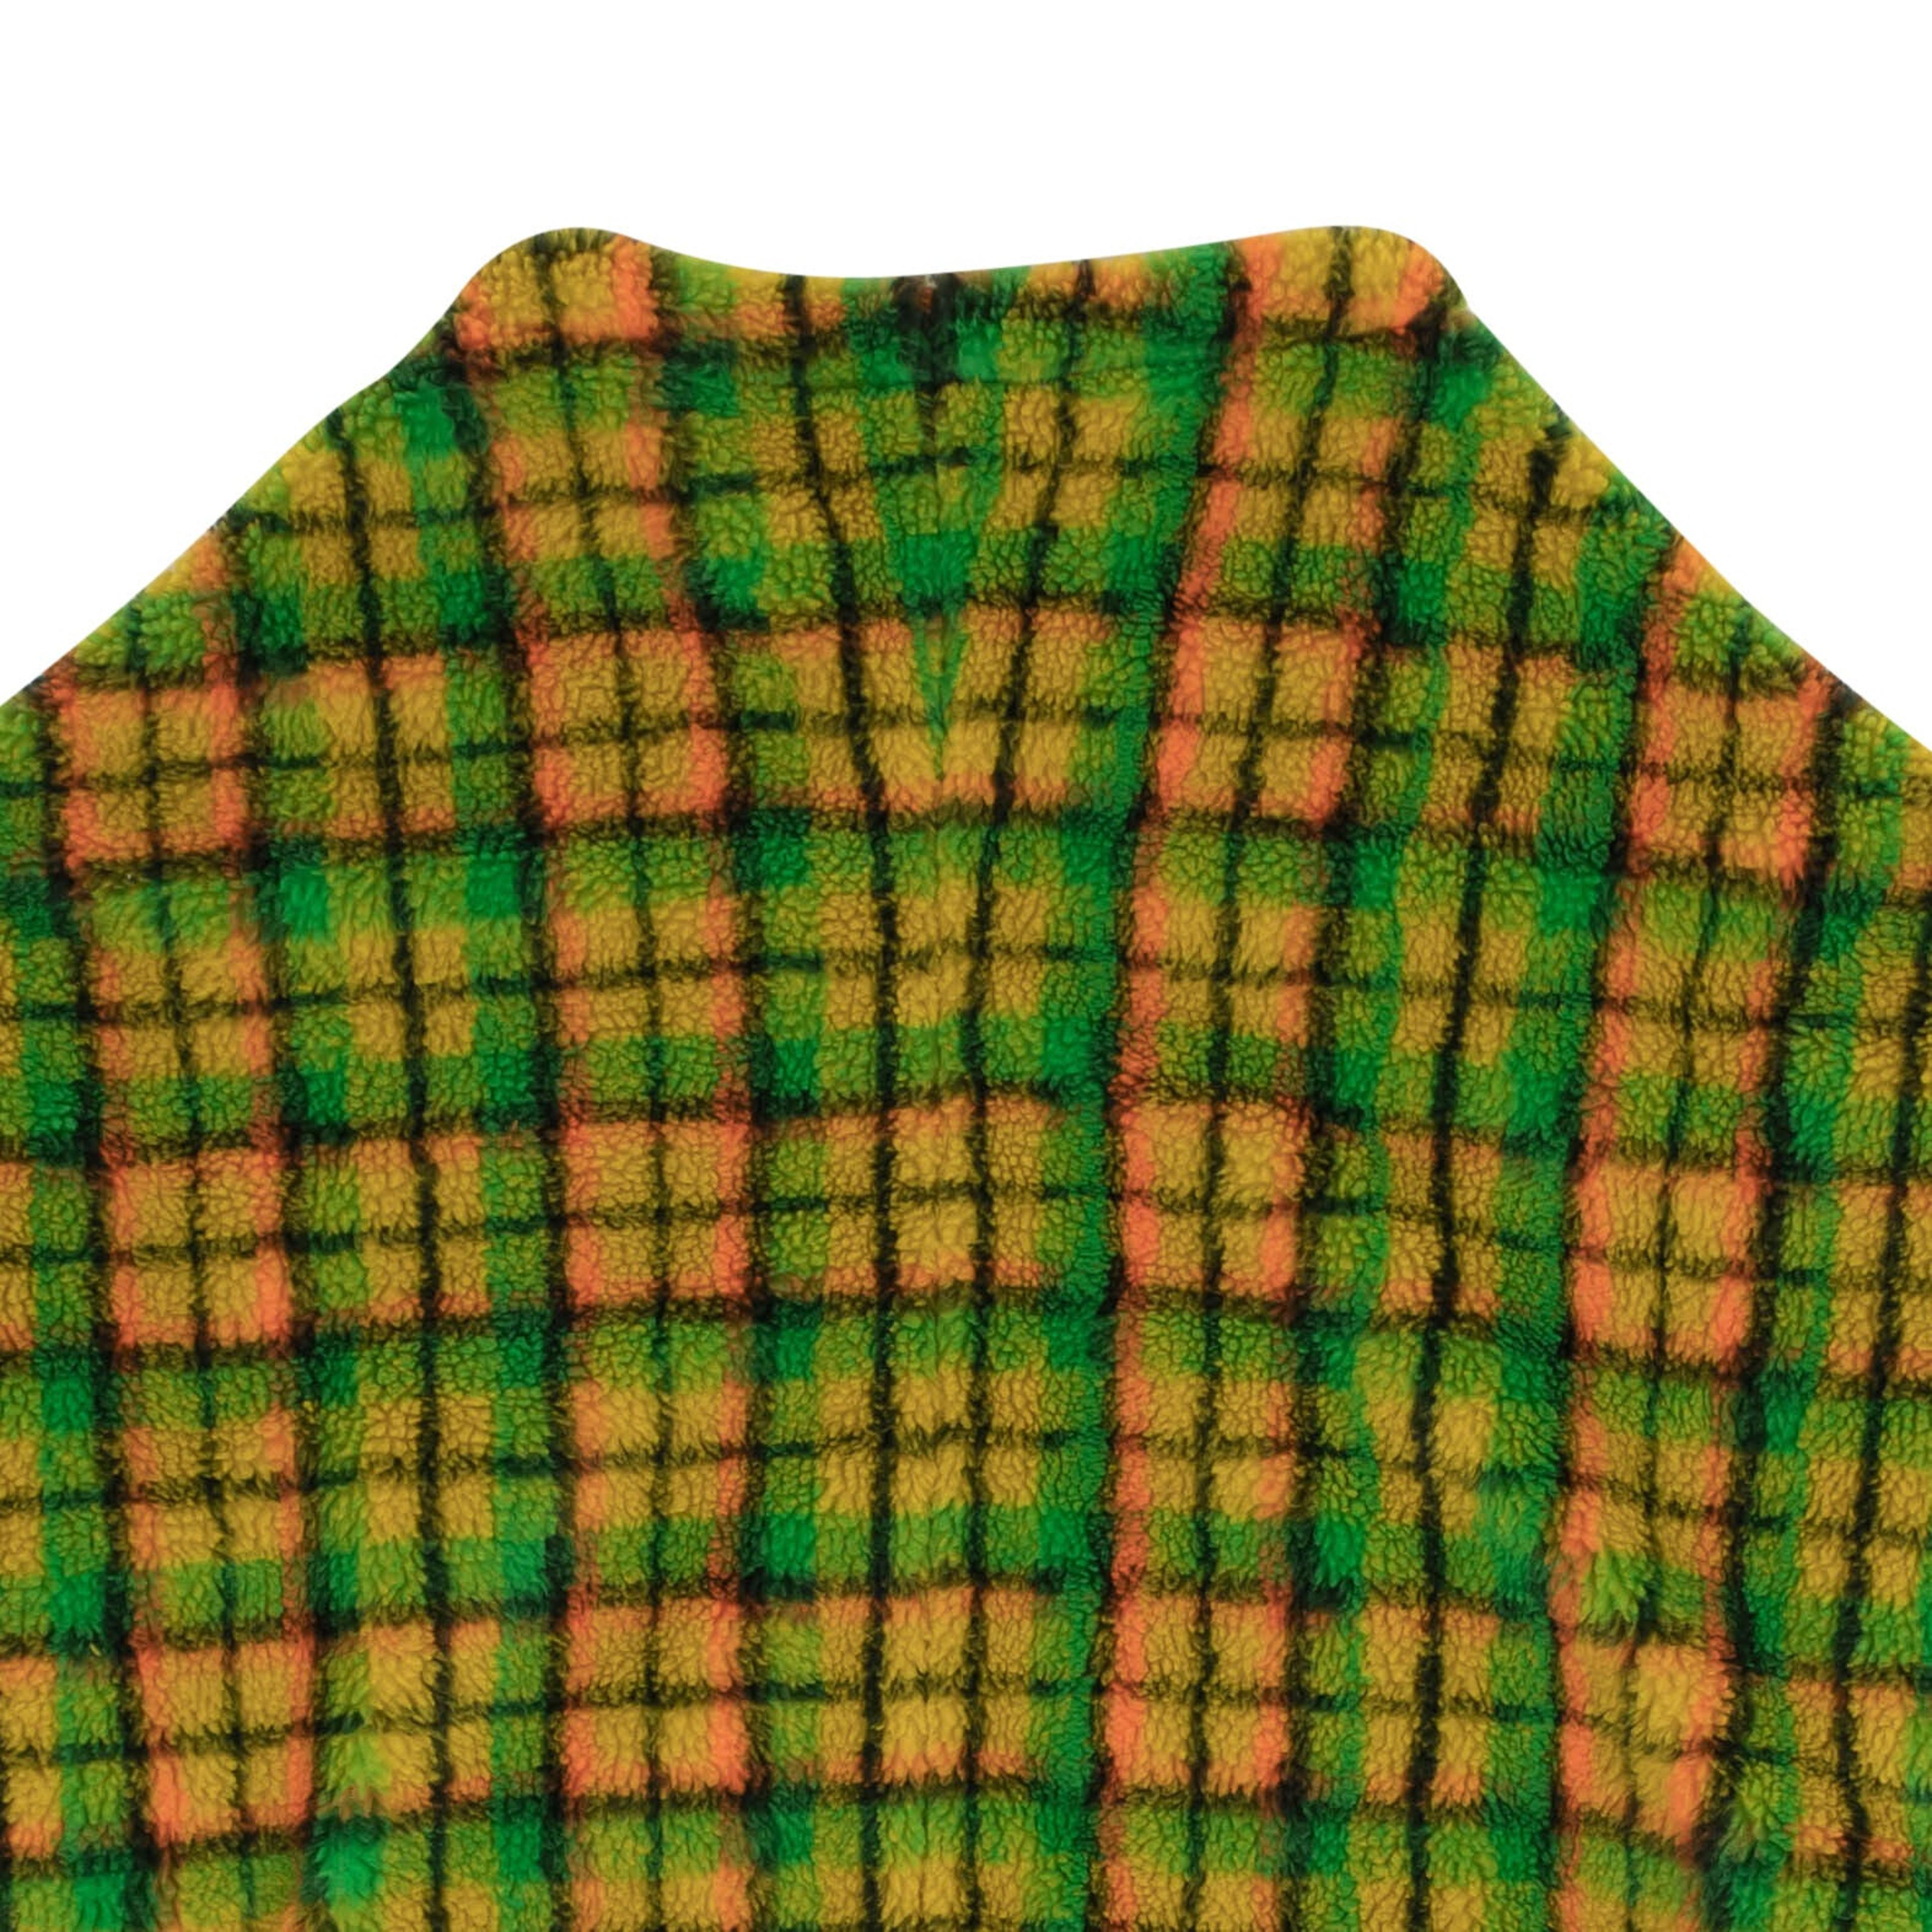 Alternate View 3 of Green Check Multi Fleece Anorak Jacket